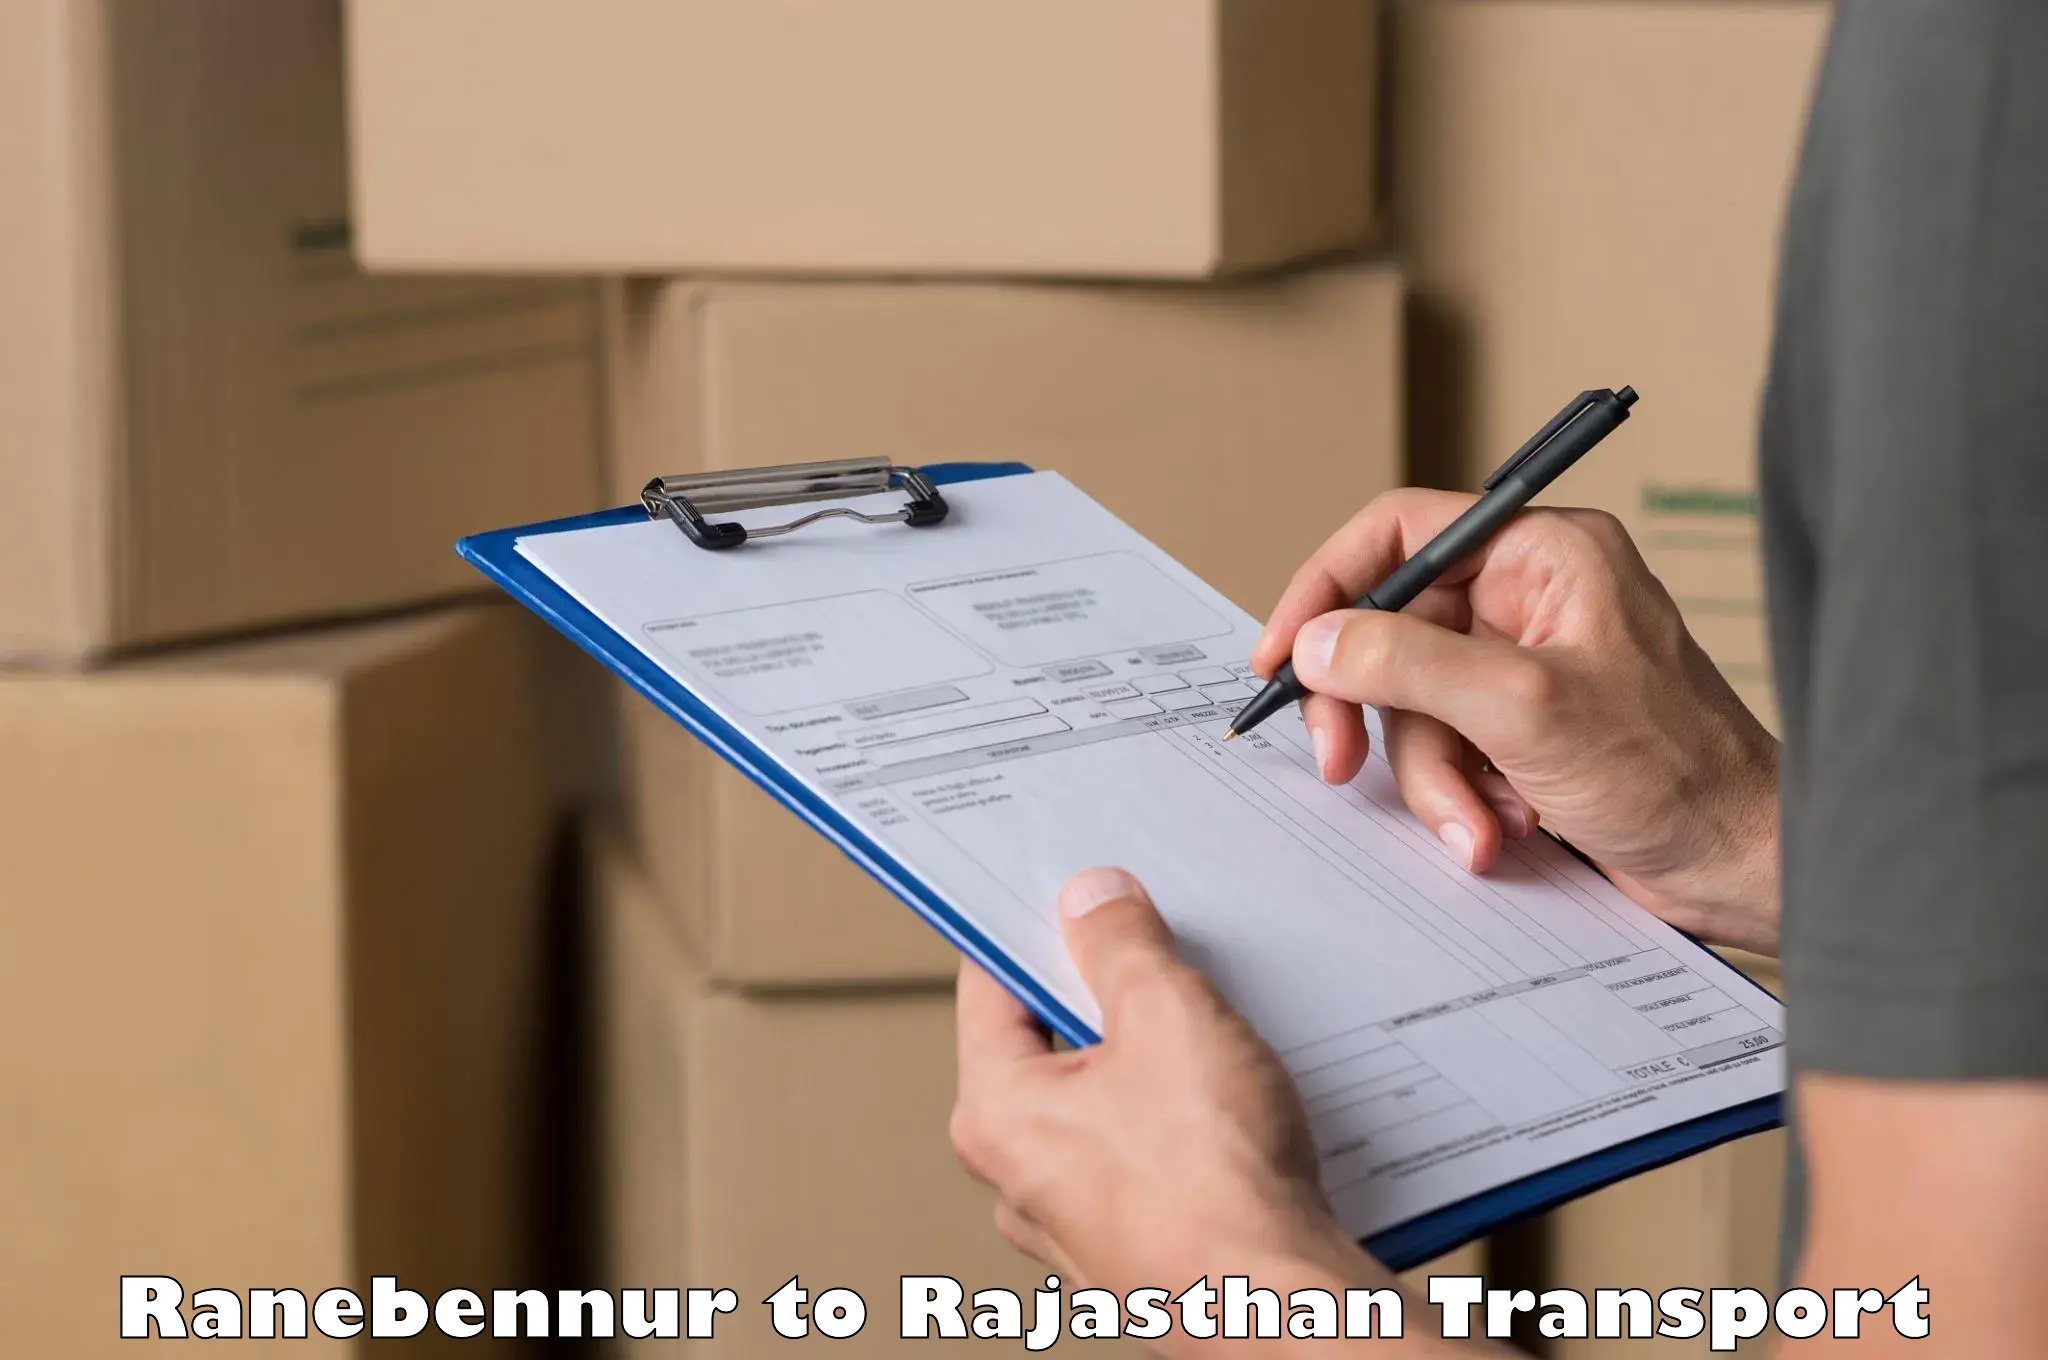 Truck transport companies in India Ranebennur to Pokhran